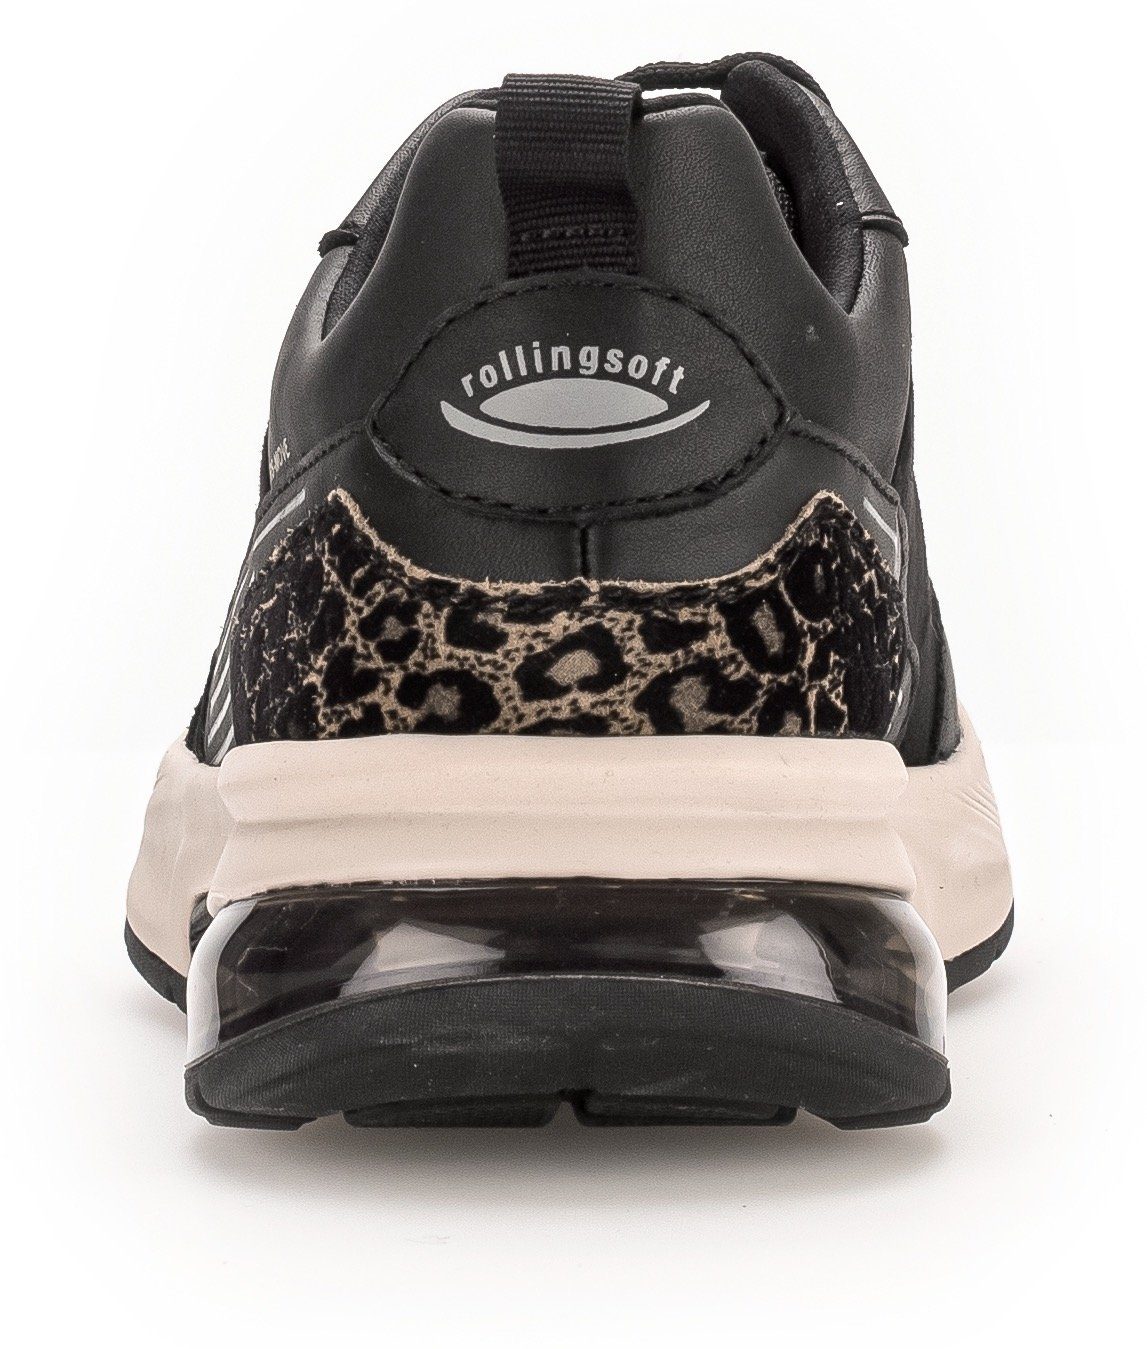 Gabor Rollingsoft Keilsneaker mit schwarz/farro in Leo-Optik Besatz